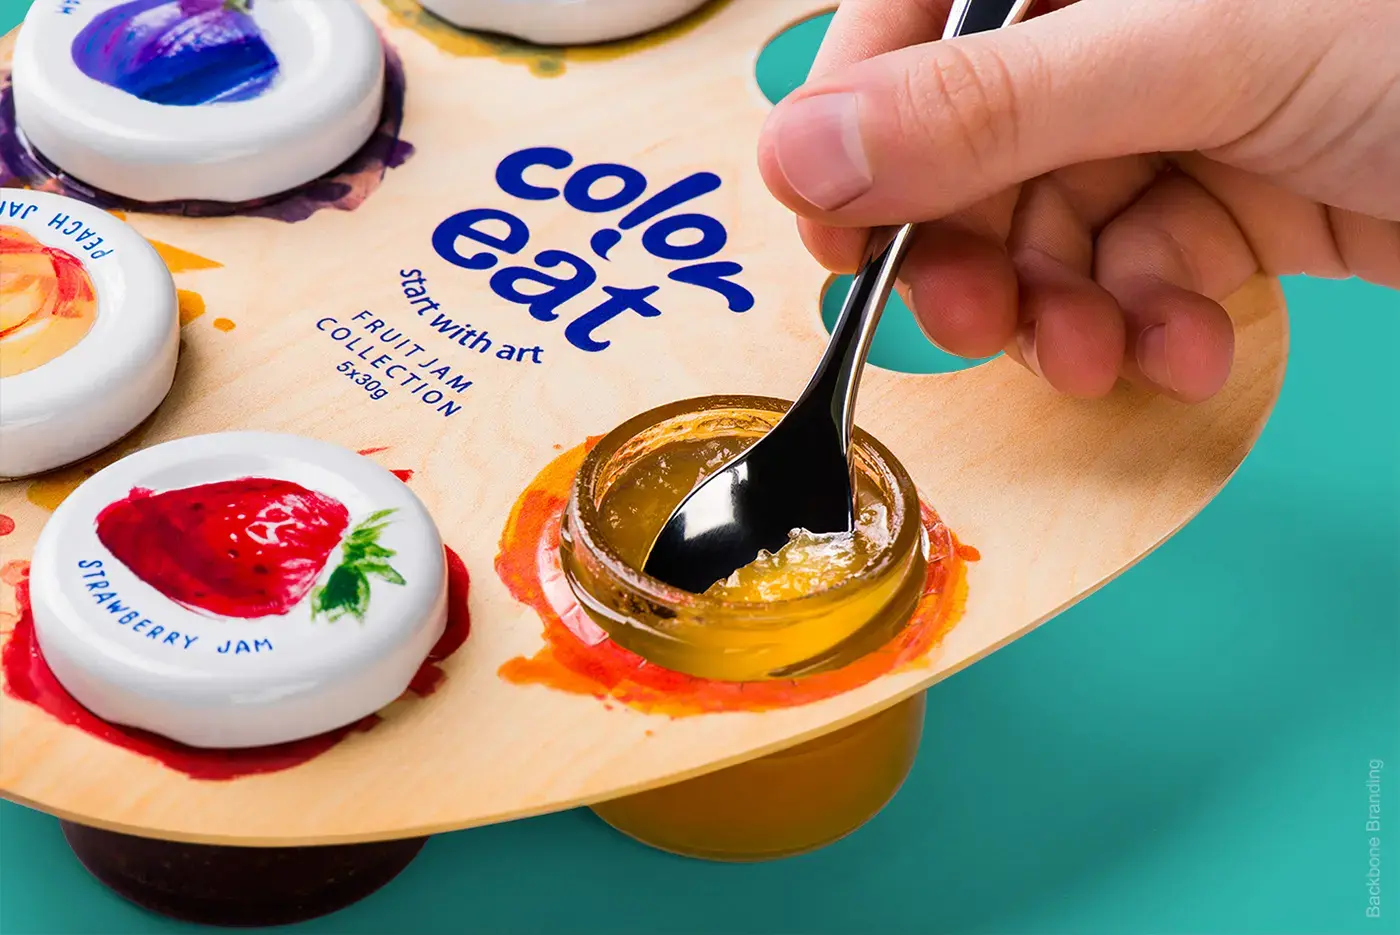 Blogduwebdesign inspiration packagings originaux innovants color eat 2